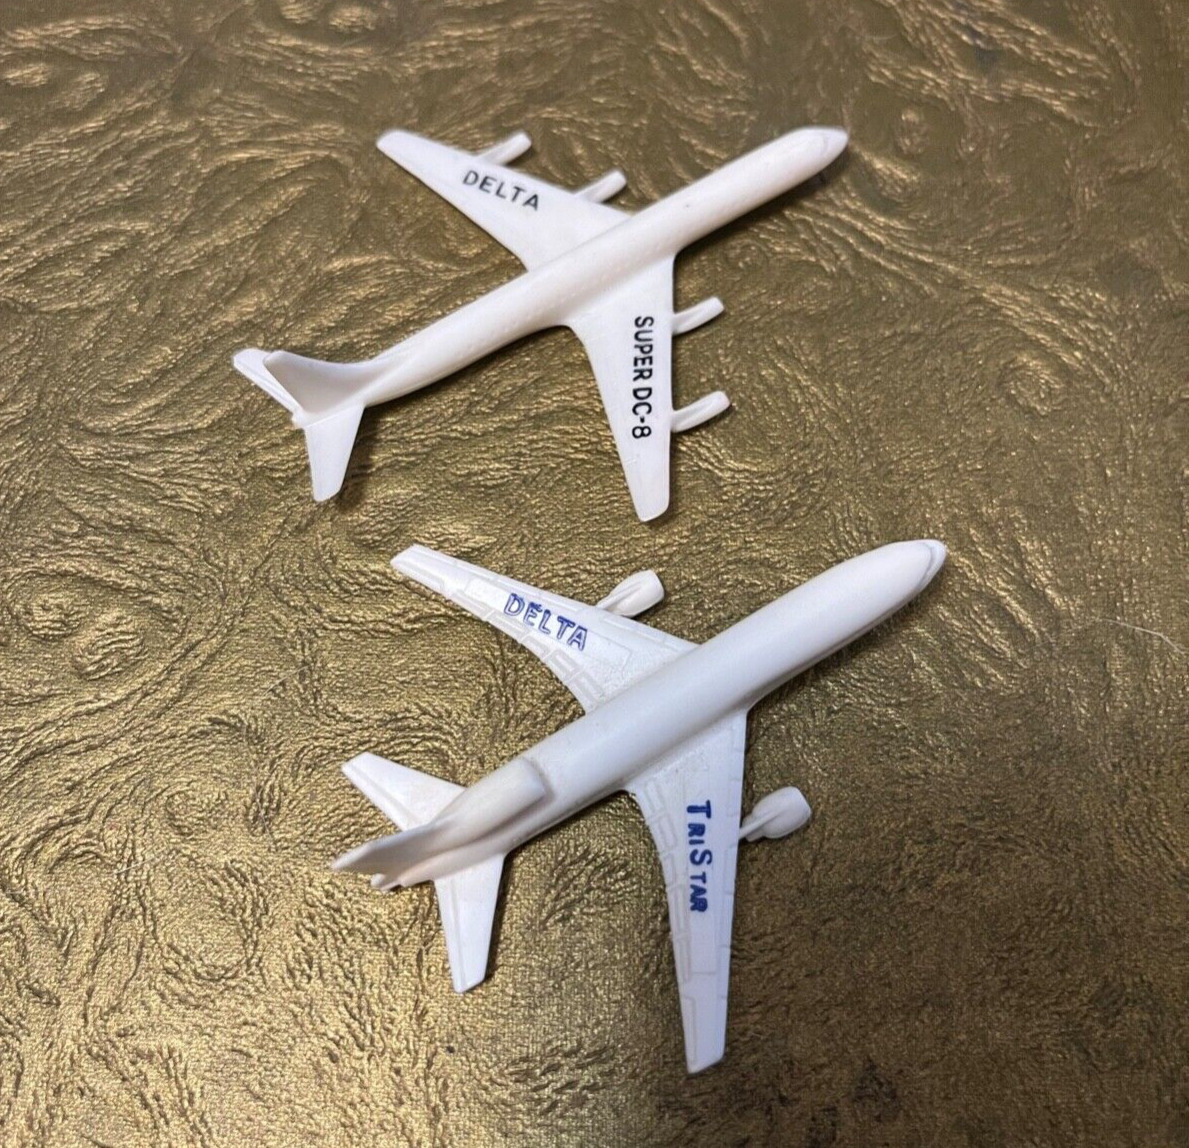 Delta  DC-8 & L1011 TWO planes  - plastic toy vintage jet airplane